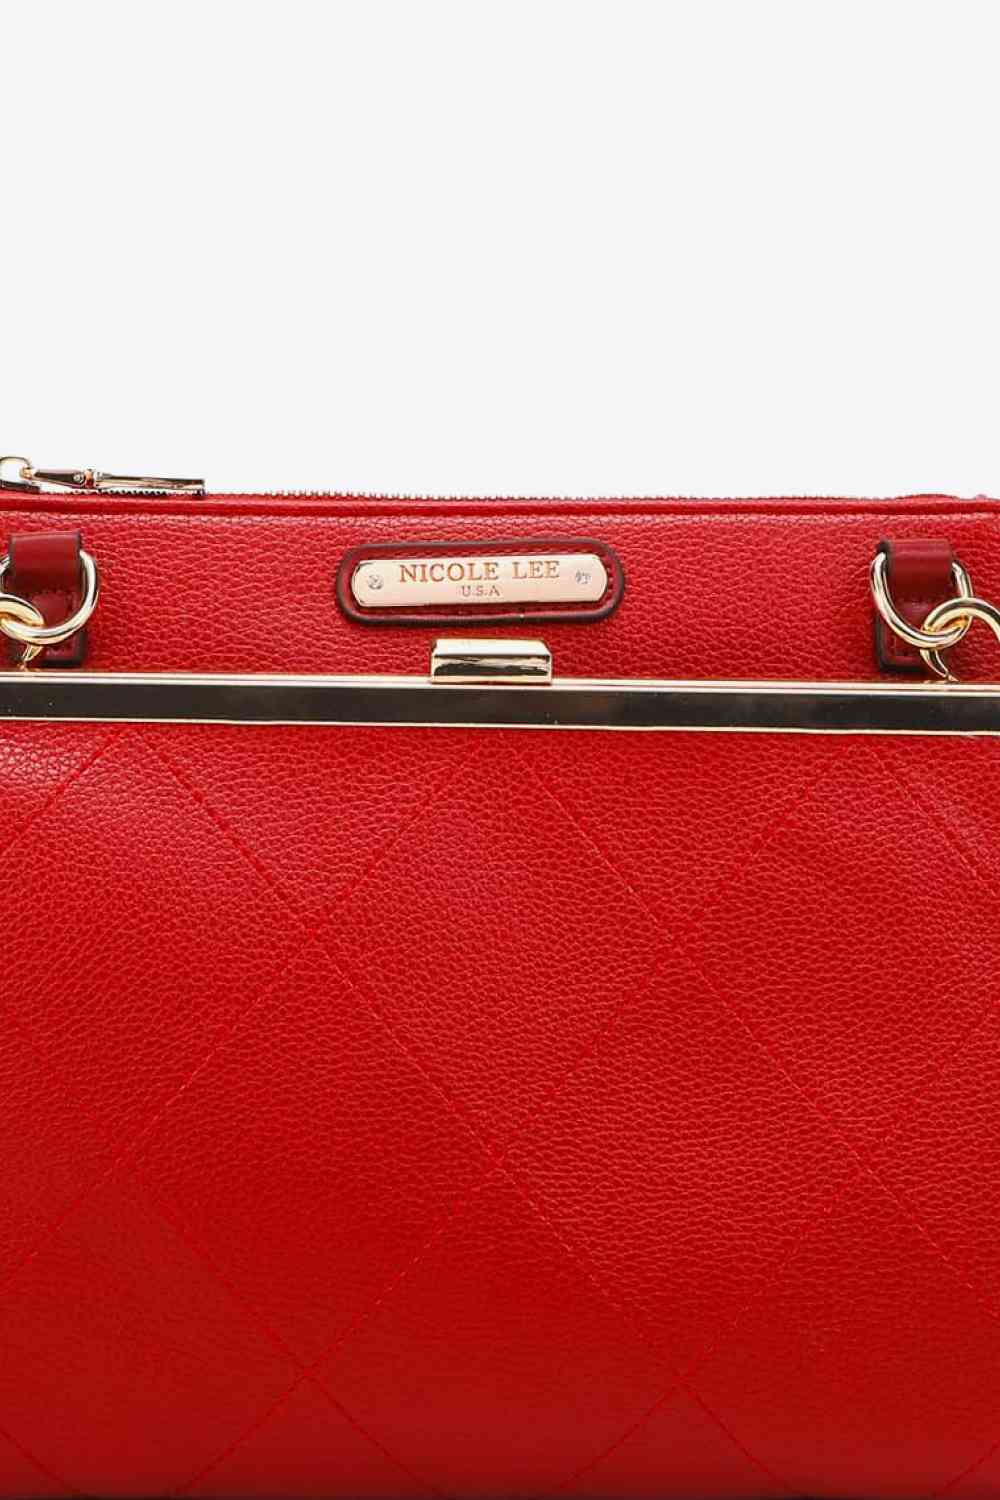 7 Exquisite Everyday Handbag